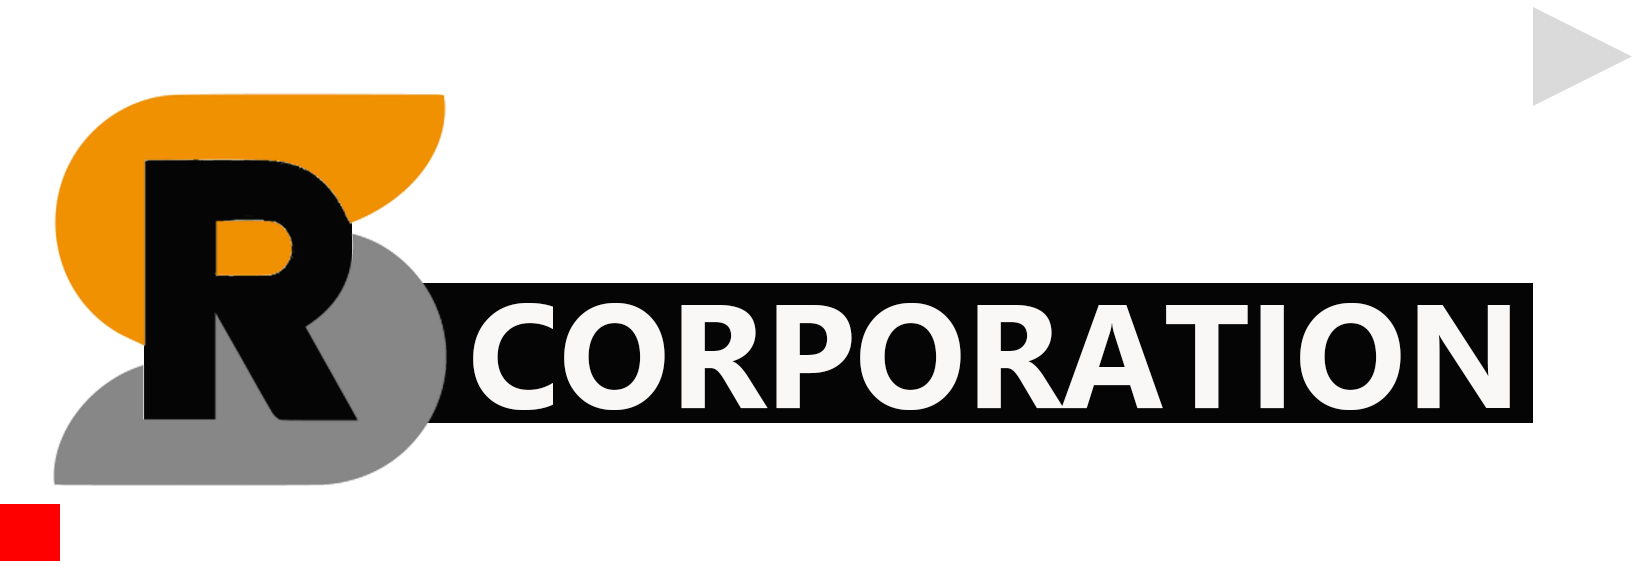 SR Corporation BD